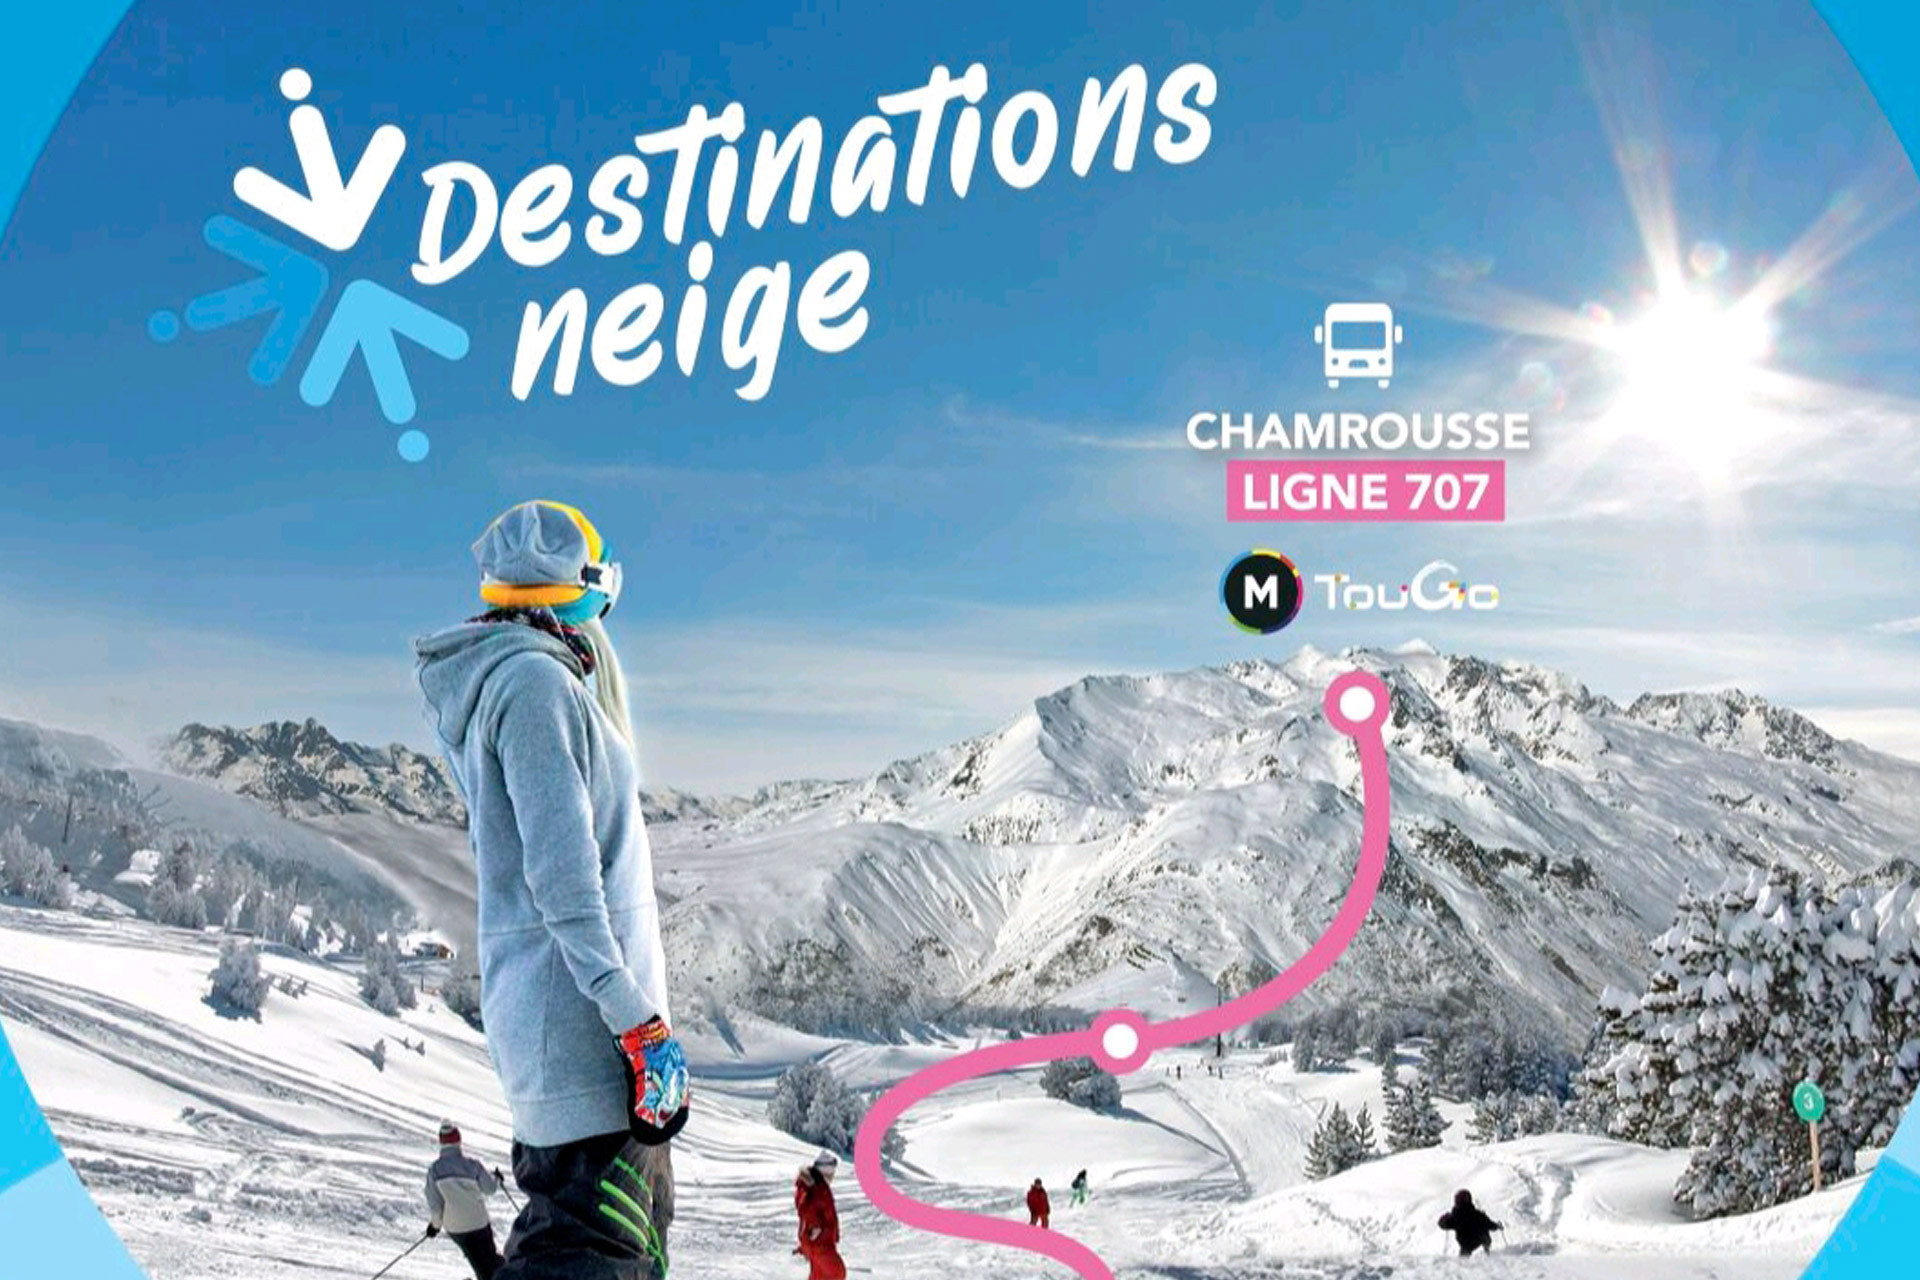 Chamrousse destination neige skibus ligne bus 707 transport hiver station ski montagne grenoble isère alpes france